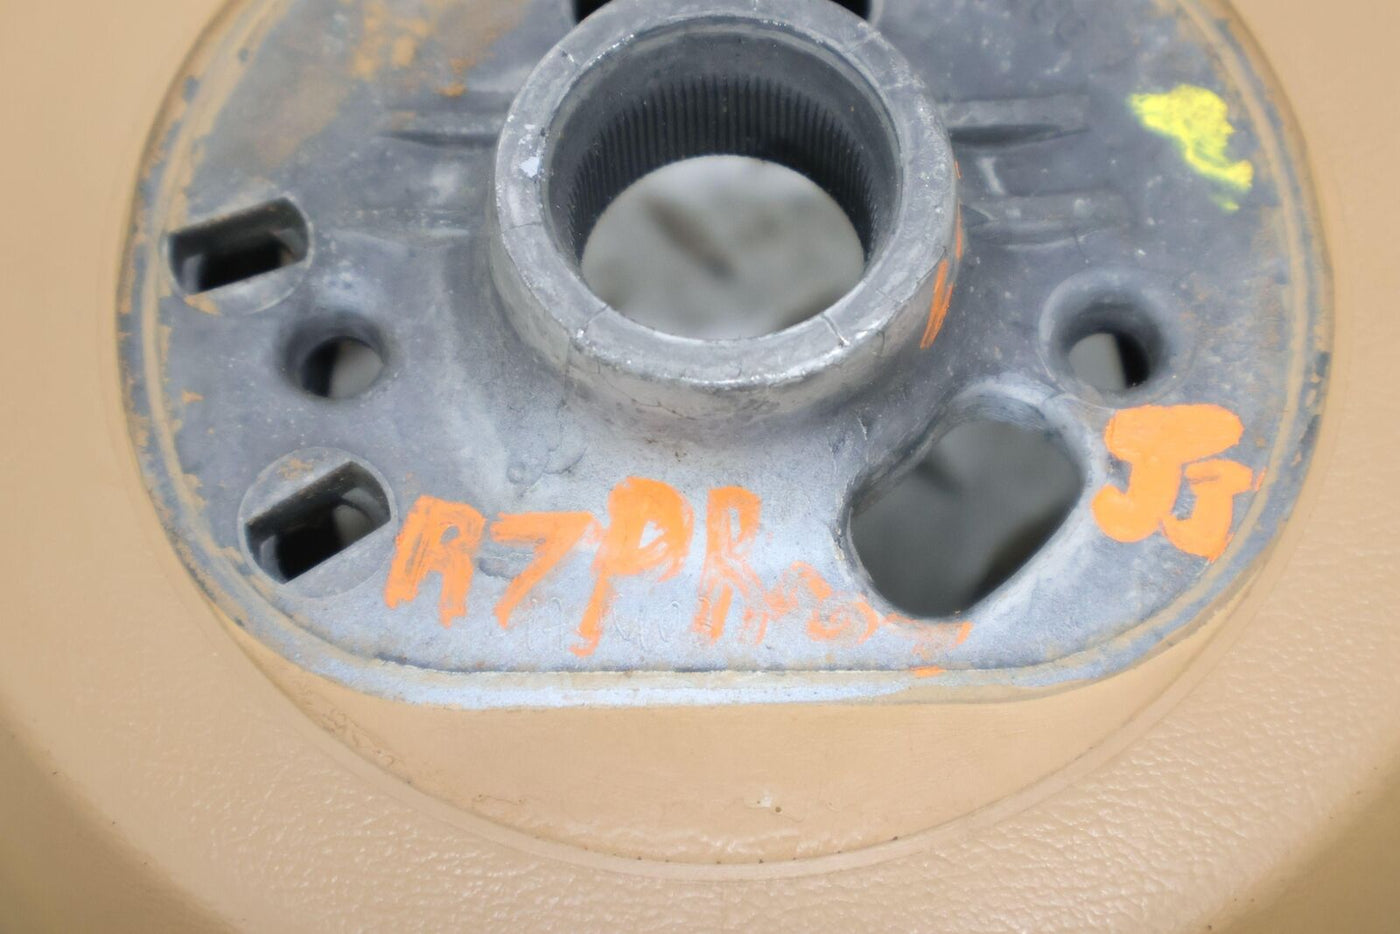 05-09 Porsche 911 997 Leather Steering Wheel (Sand Beige TD) OEM